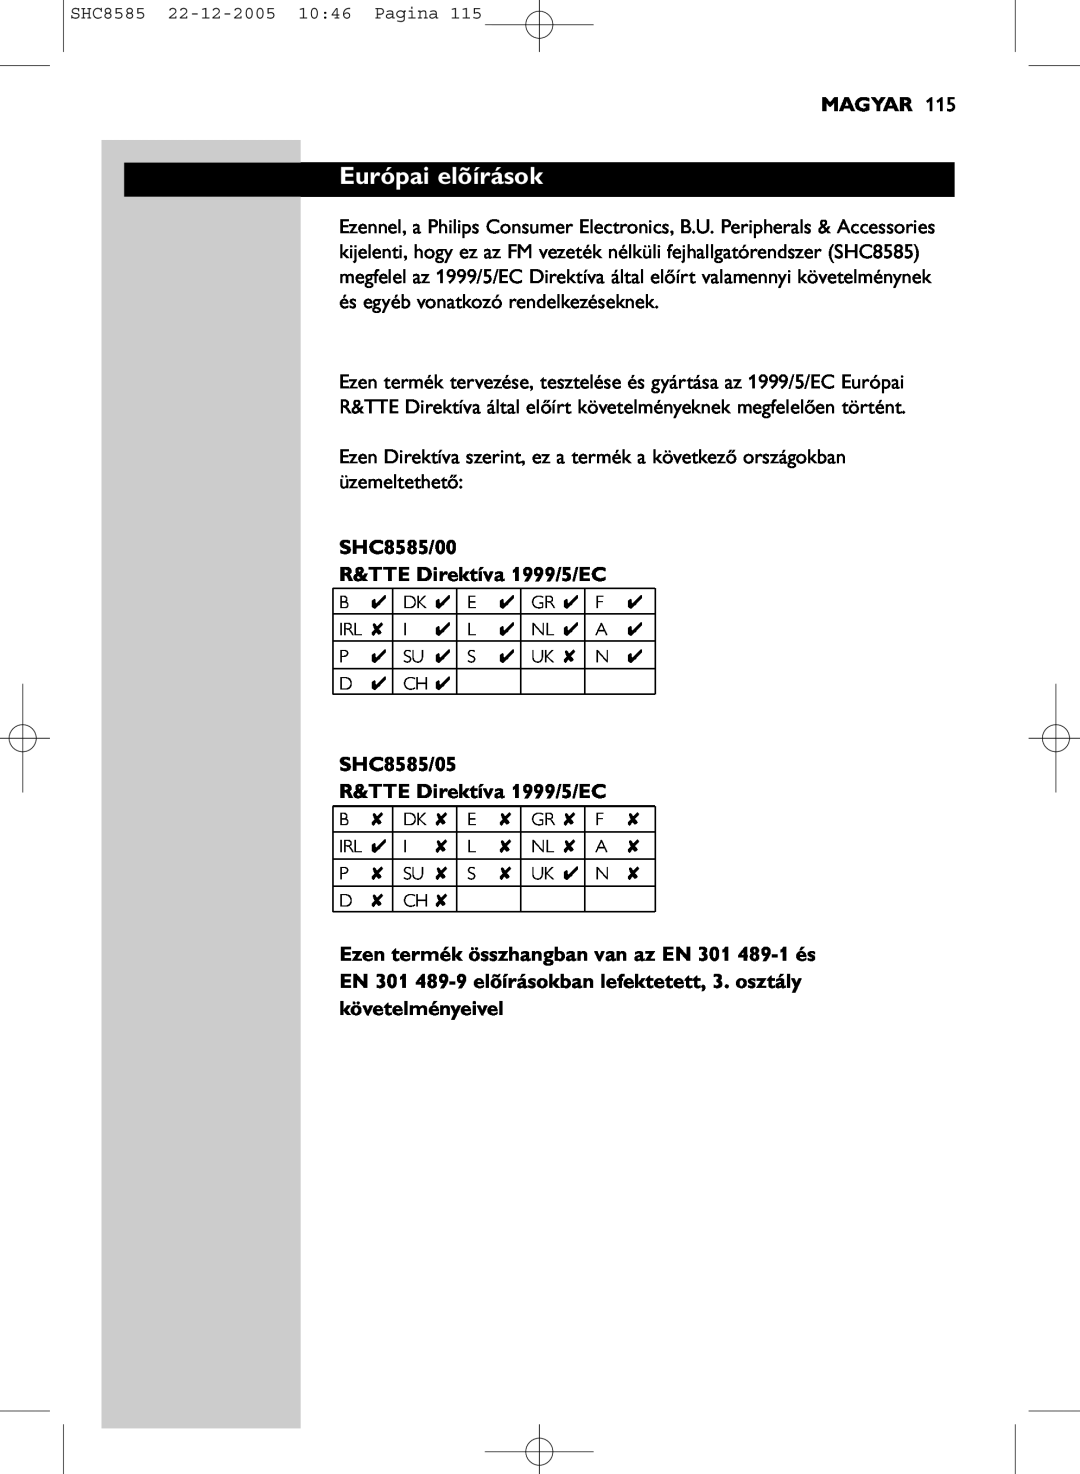 Philips manual Európai elõírások, Magyar, SHC8585/00 R&TTE Direktíva 1999/5/EC, SHC8585/05 R&TTE Direktíva 1999/5/EC 